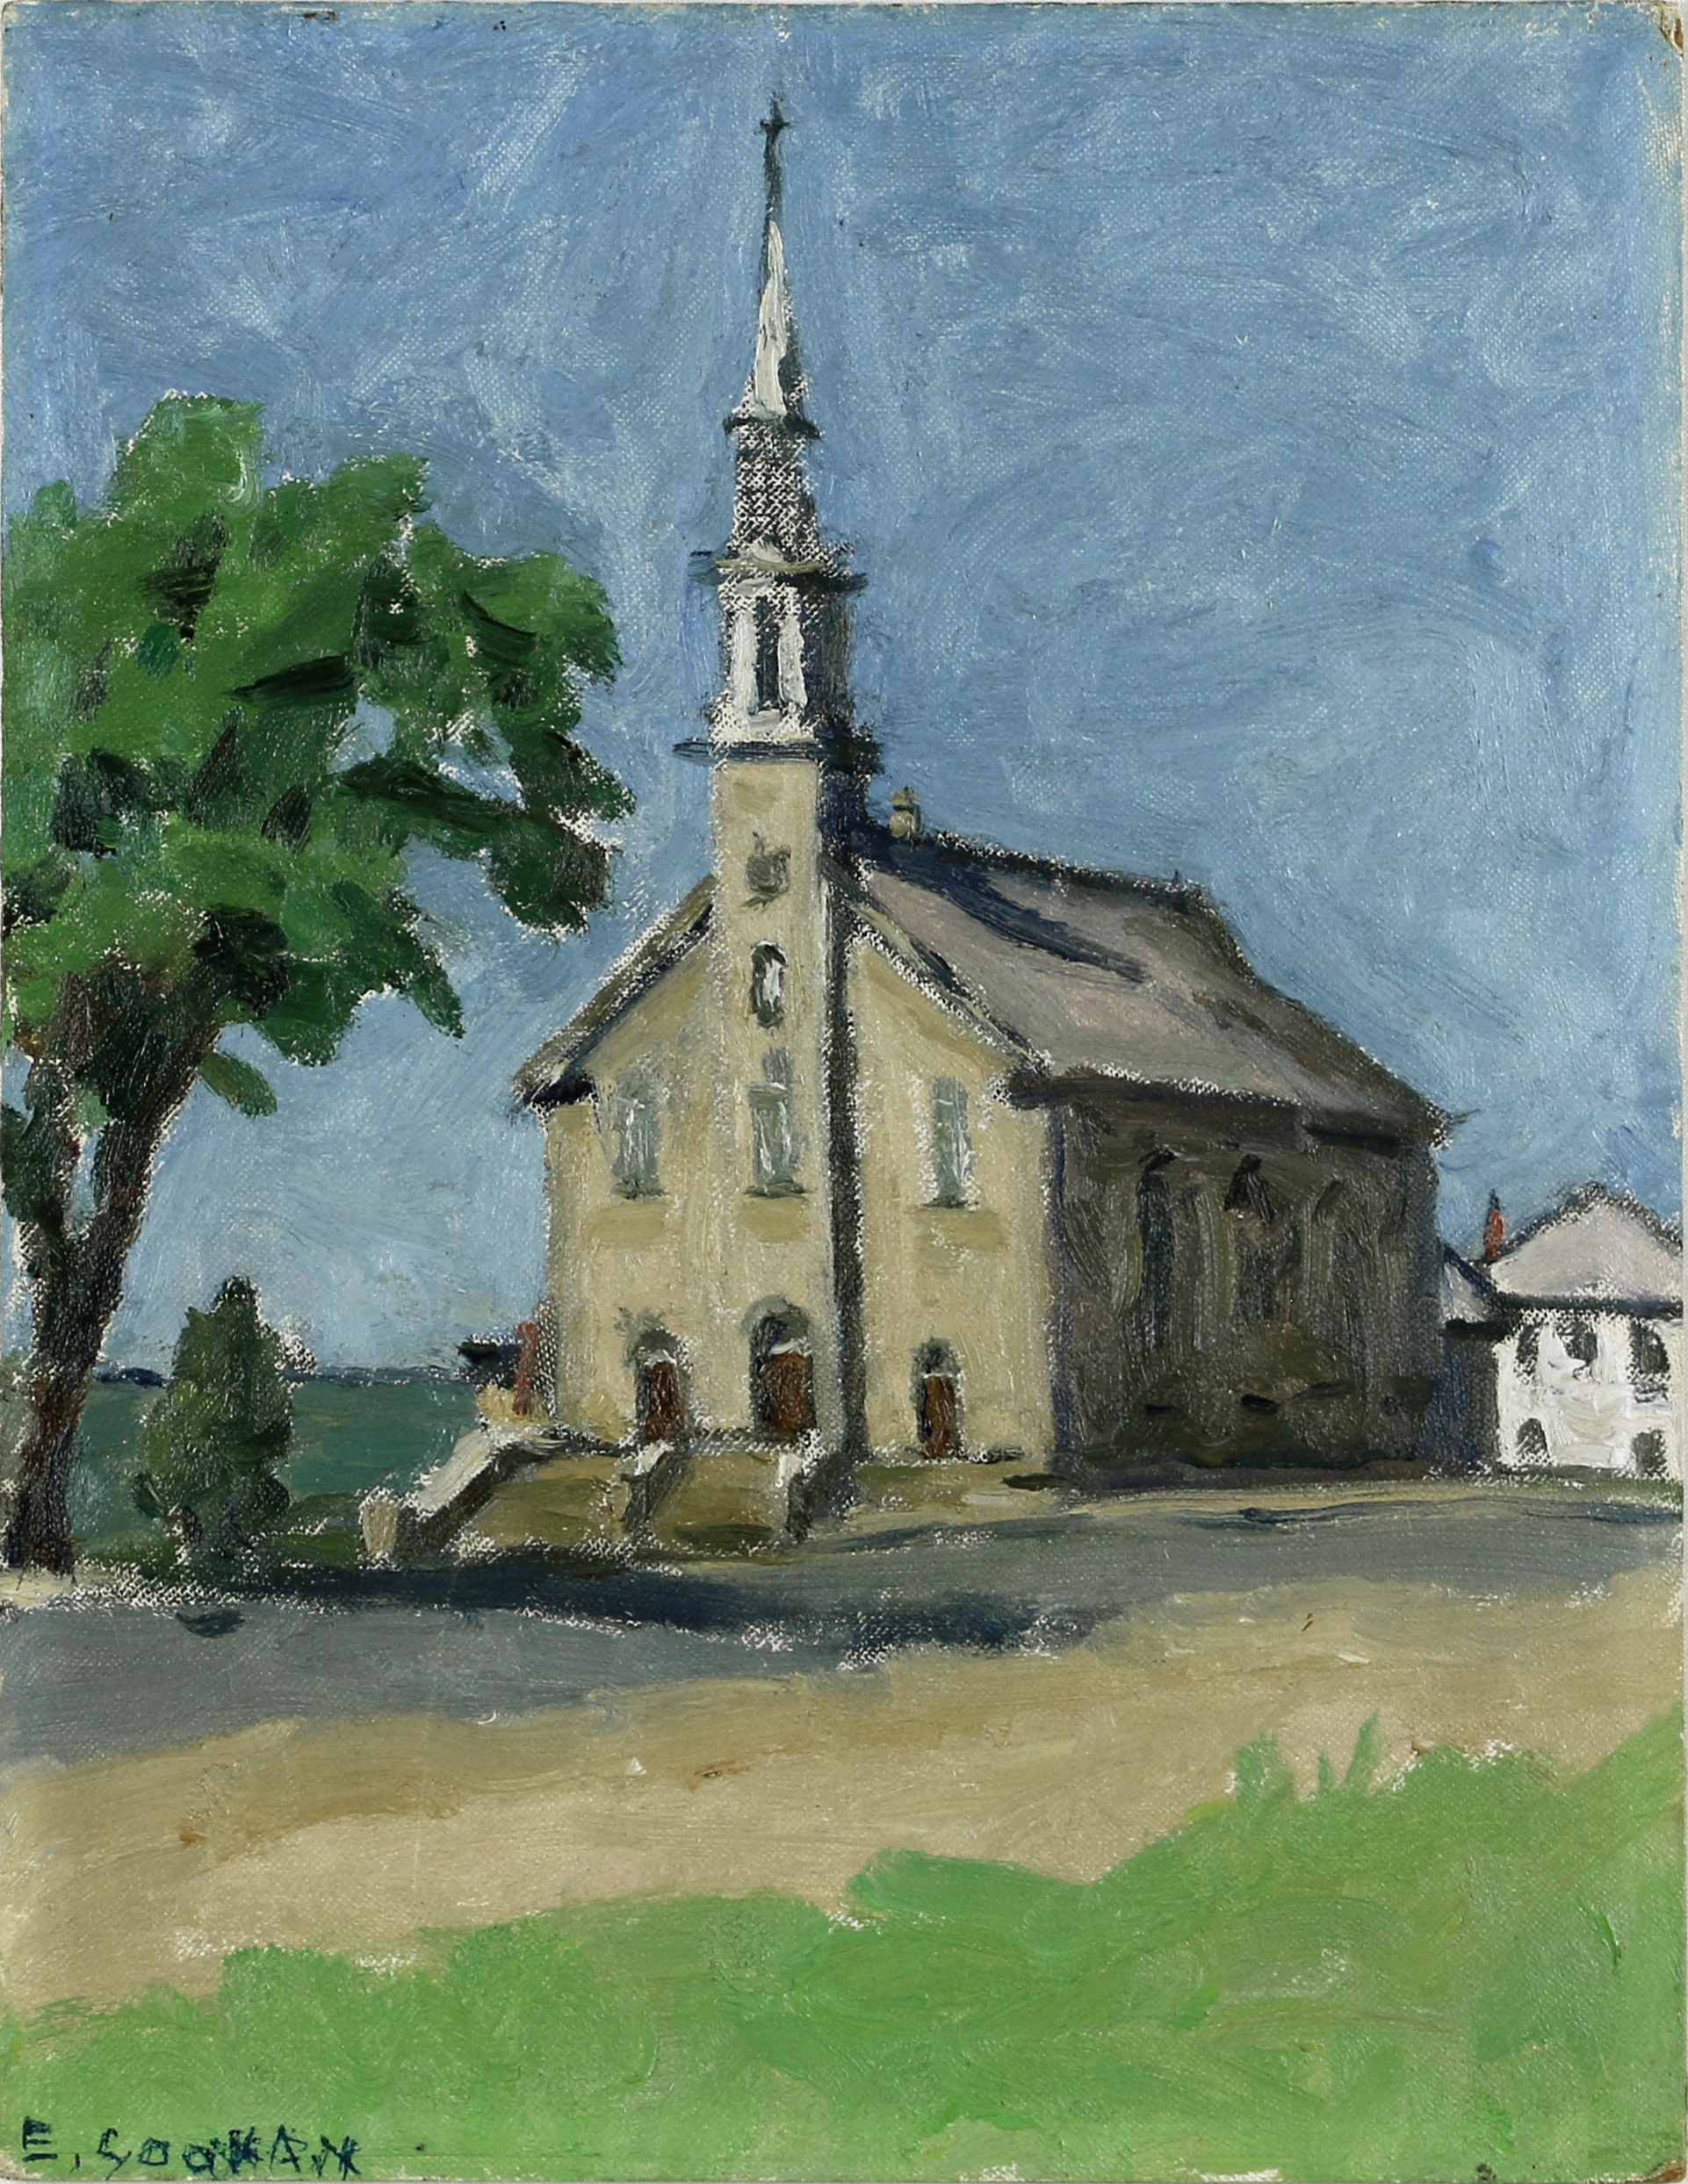 Emiy Coonan, Church at Notre-Dame-du-Portage (Near Cacouna) Oil on canvas board, 14 x 11 in (35.6 x 27.9 cm)